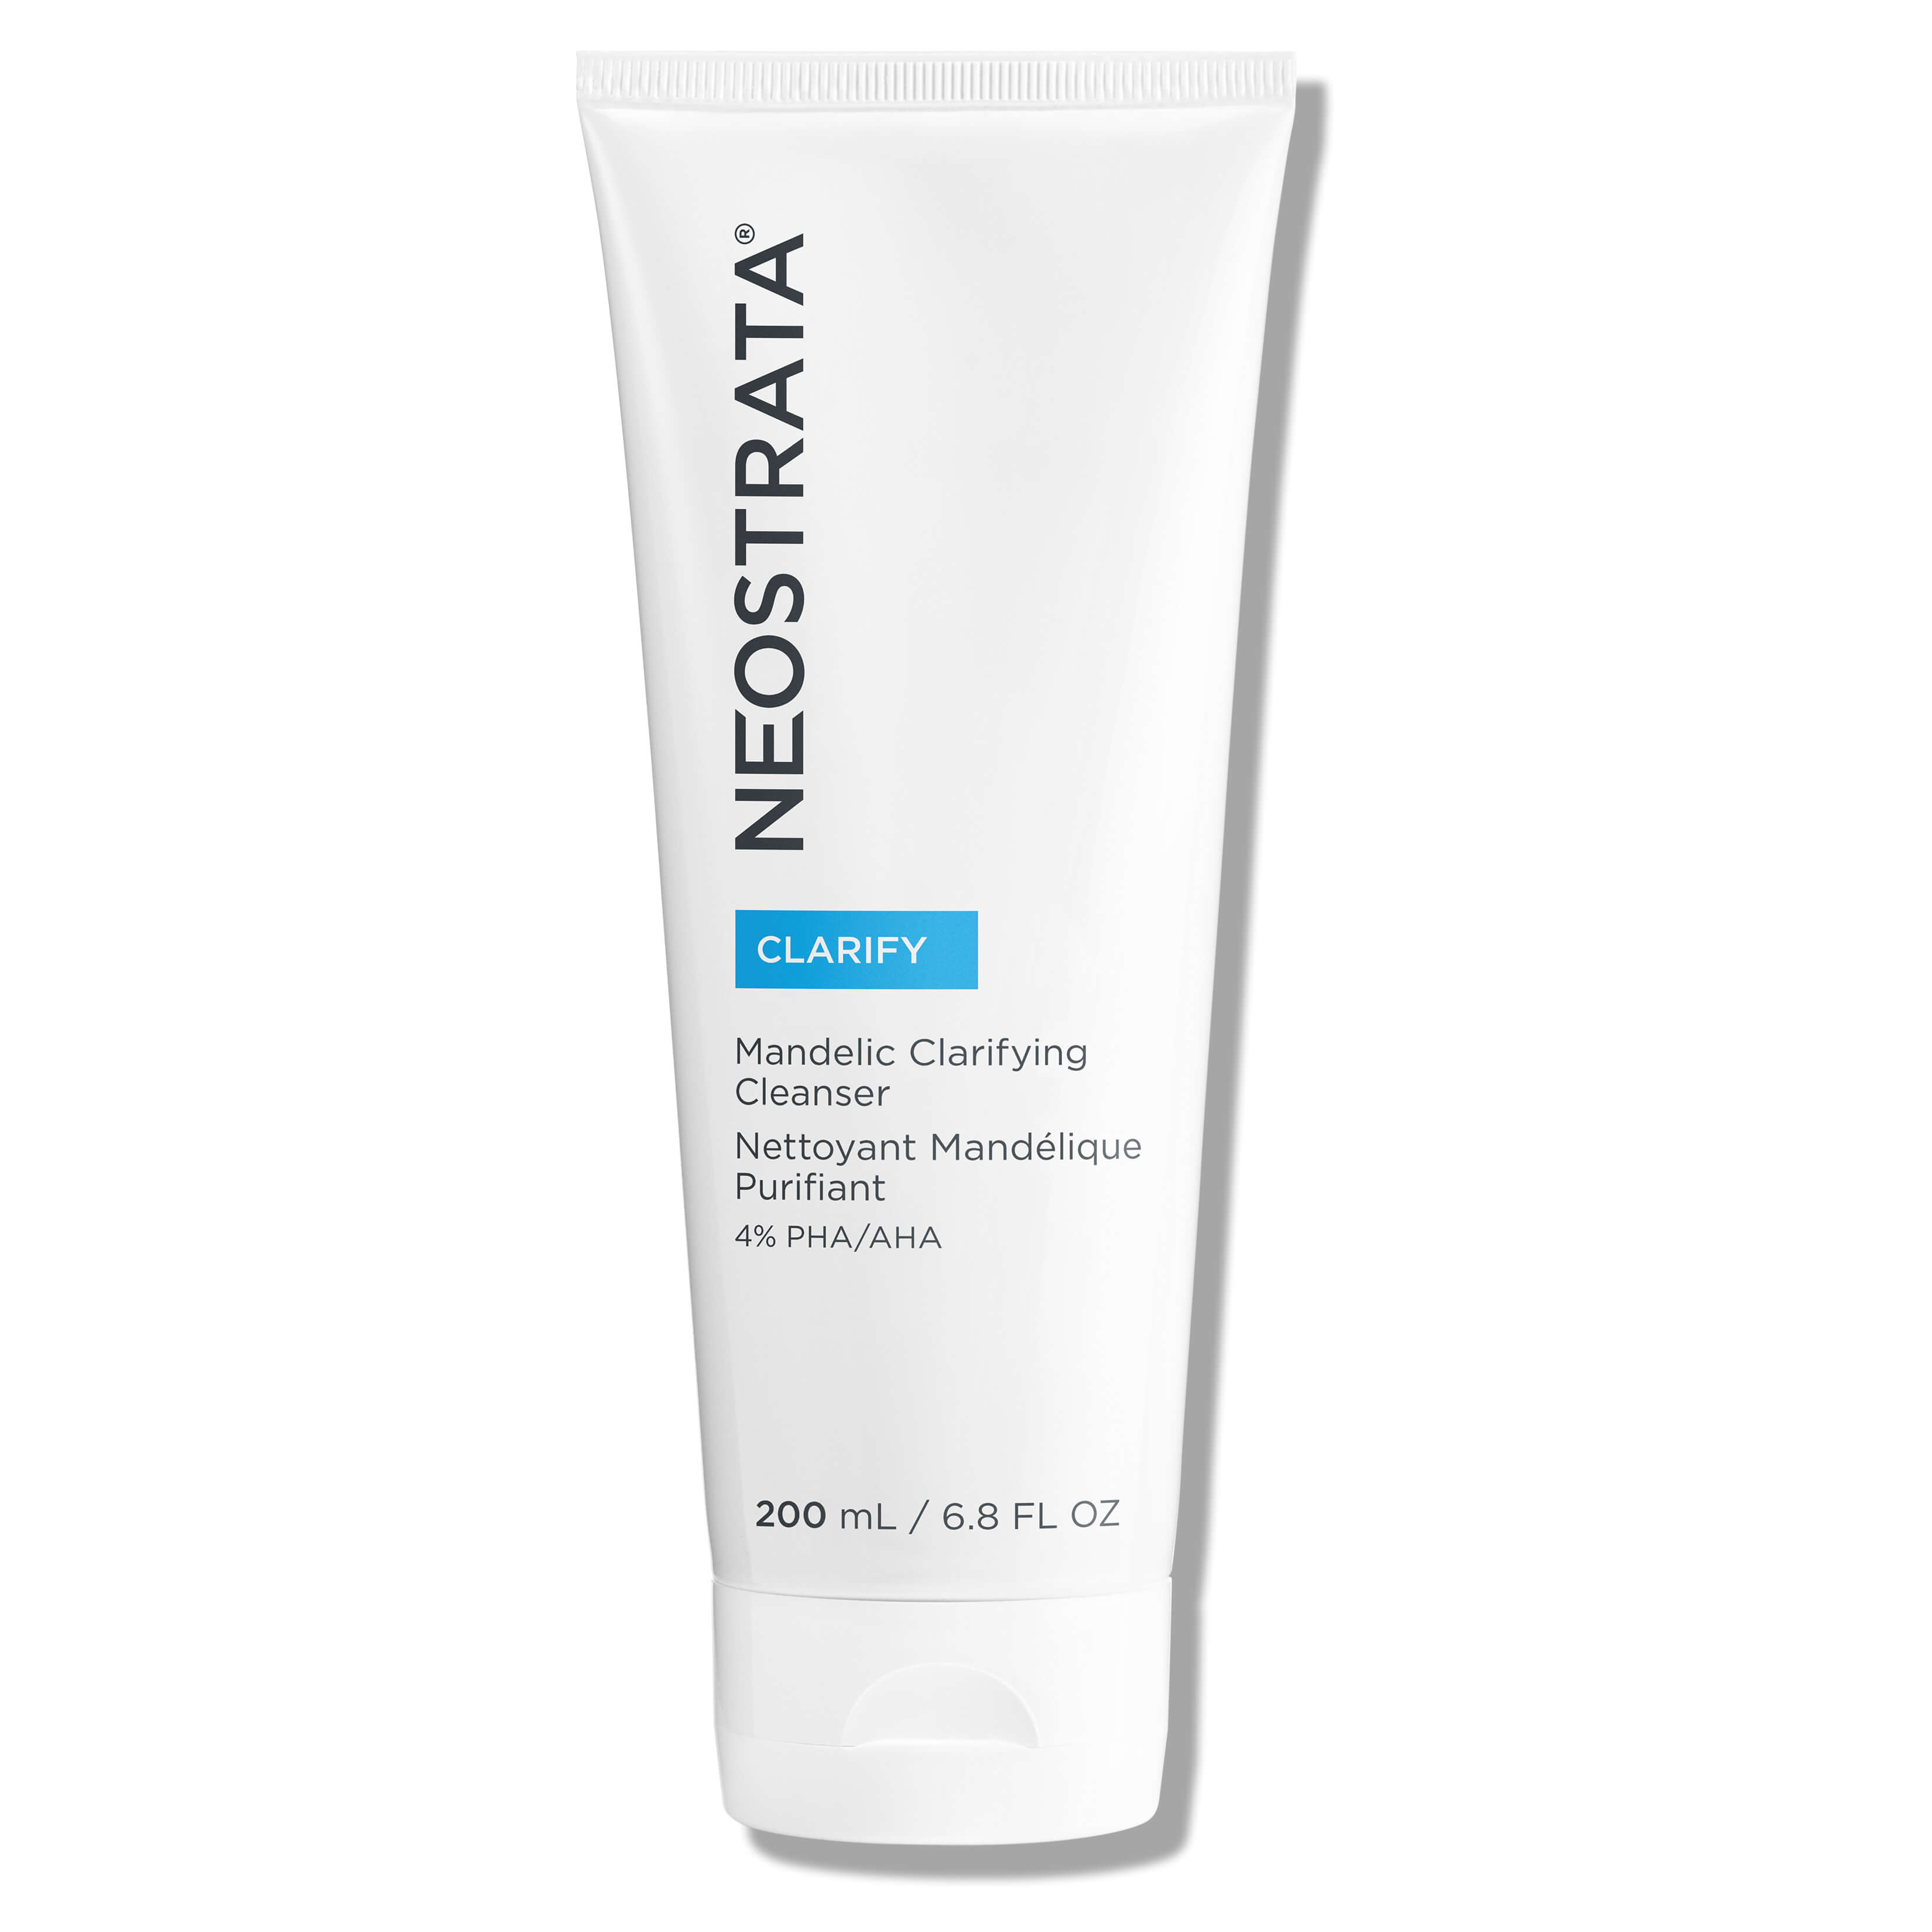 NeoStrata Mandelic Clarifying Cleanser | Gel Facial Wash For Oily Skin | 4% PHA/AHA | Anti-Aging